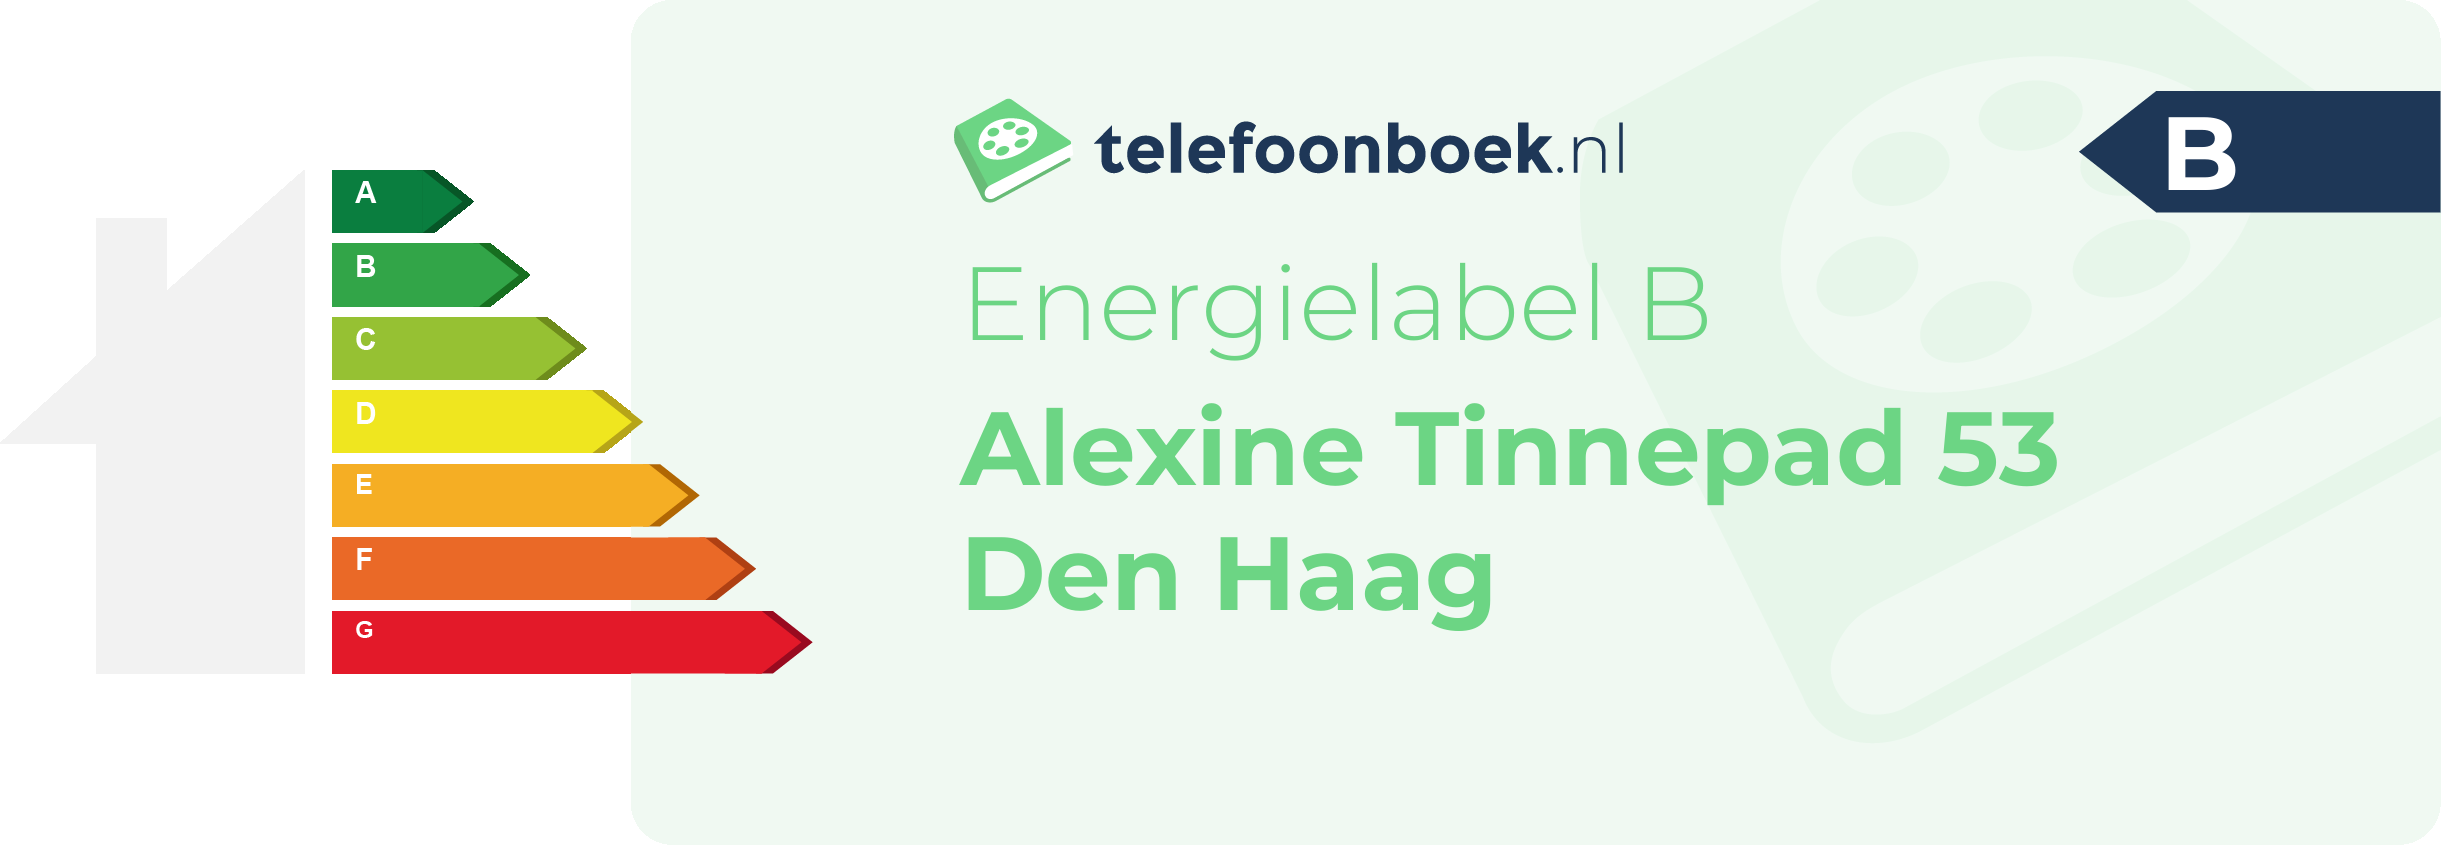 Energielabel Alexine Tinnepad 53 Den Haag